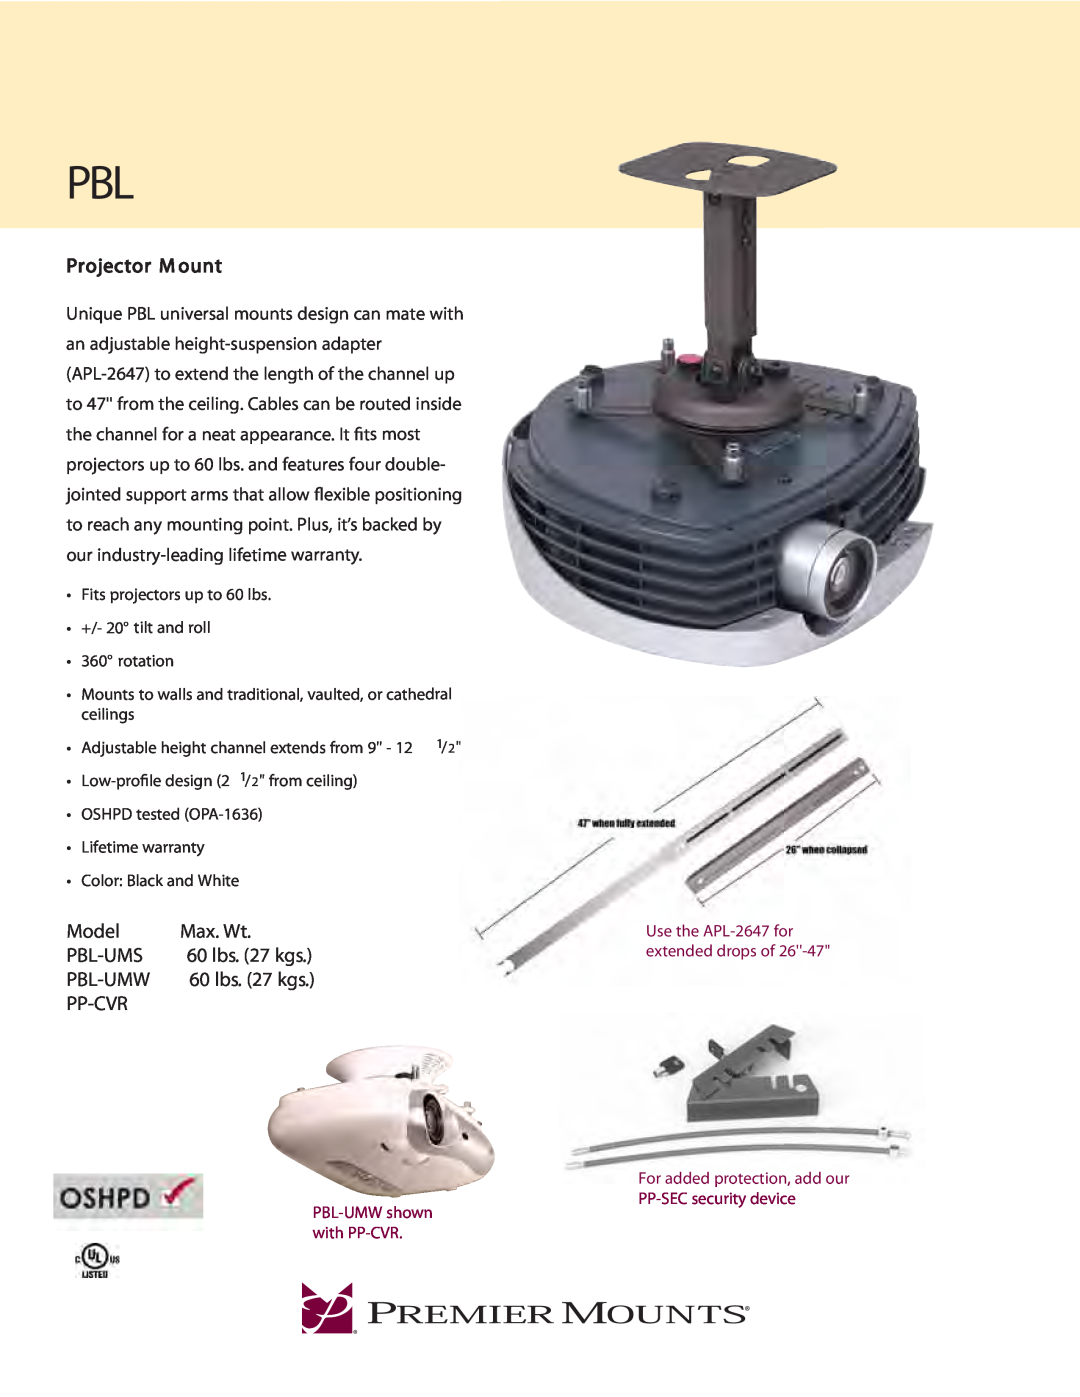 Premier Mounts warranty Projector M ount, Model, Max. Wt, Pbl-Ums, Pbl-Umw, Pp-Cvr, PBL-UMWshown, with PP-CVR 